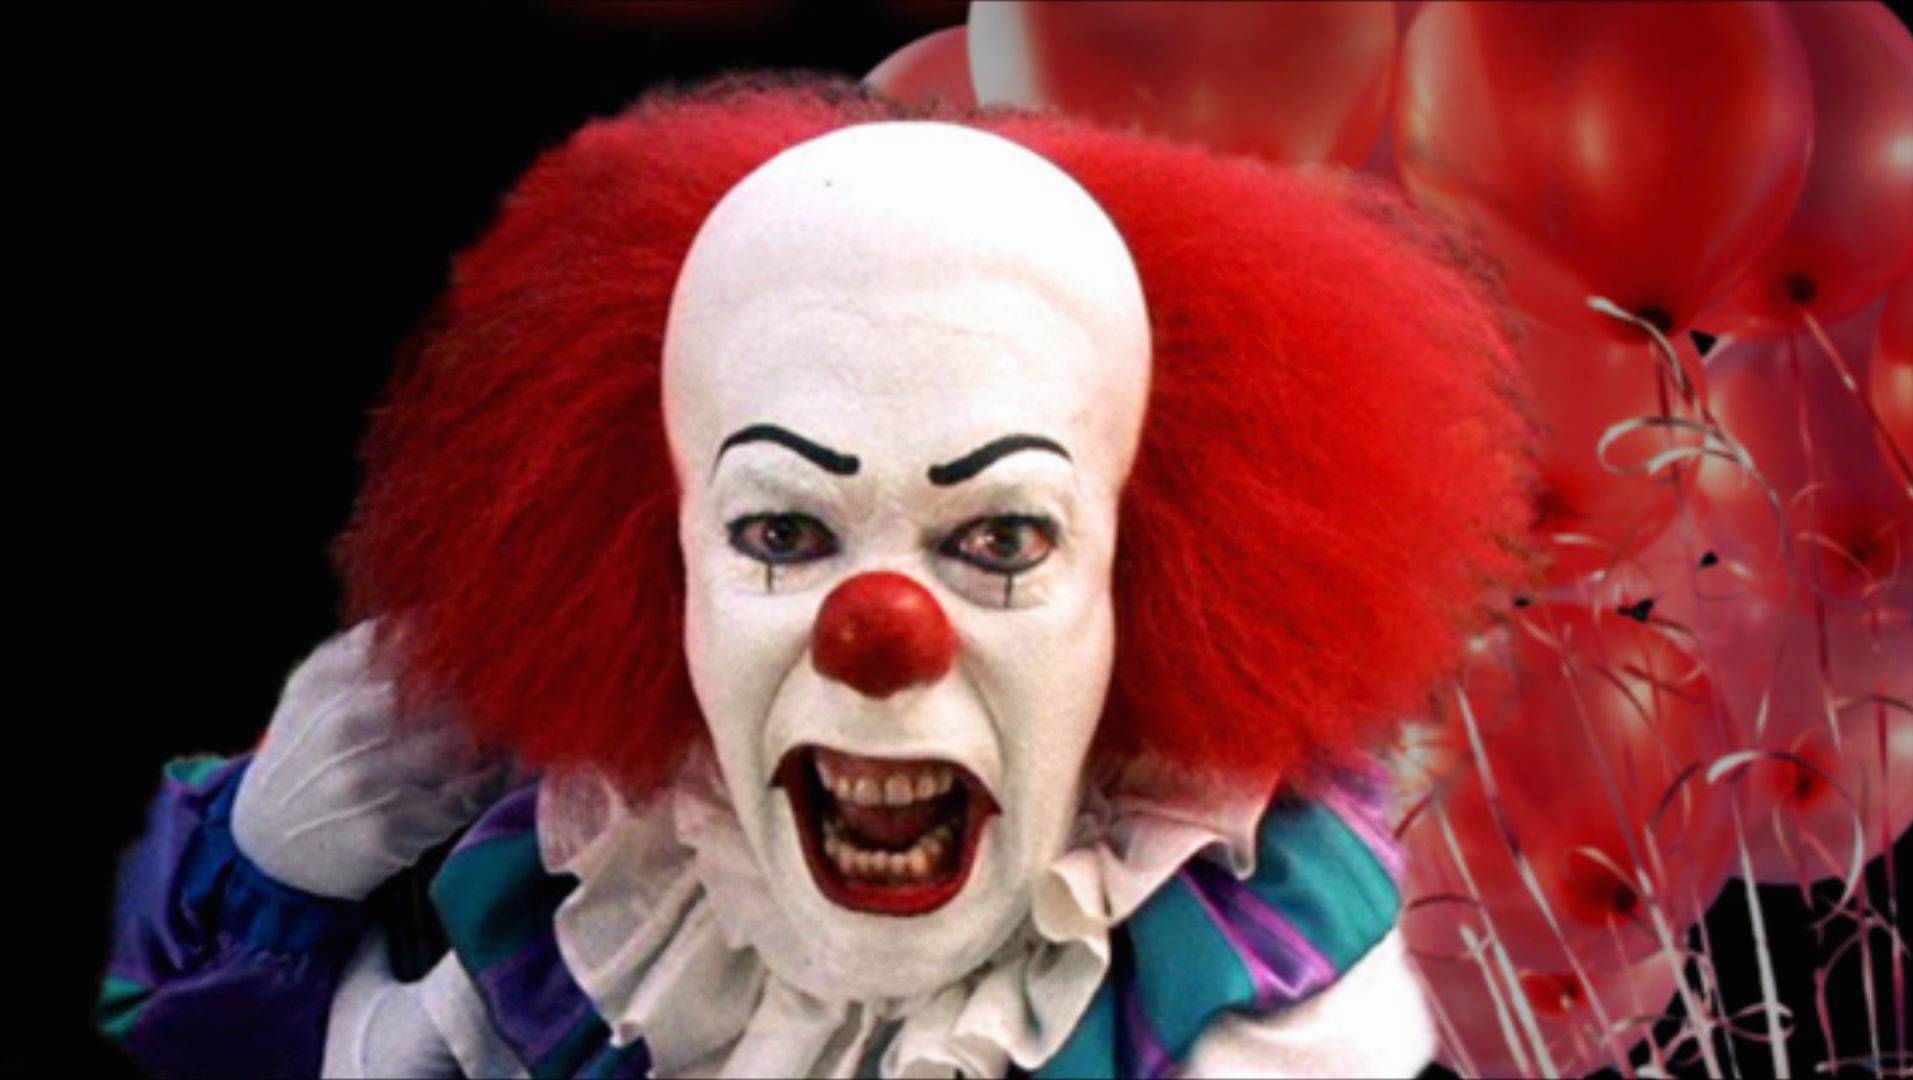 Man wearing creepy clown mask arrested in southwestern Nova | Globalnews.ca